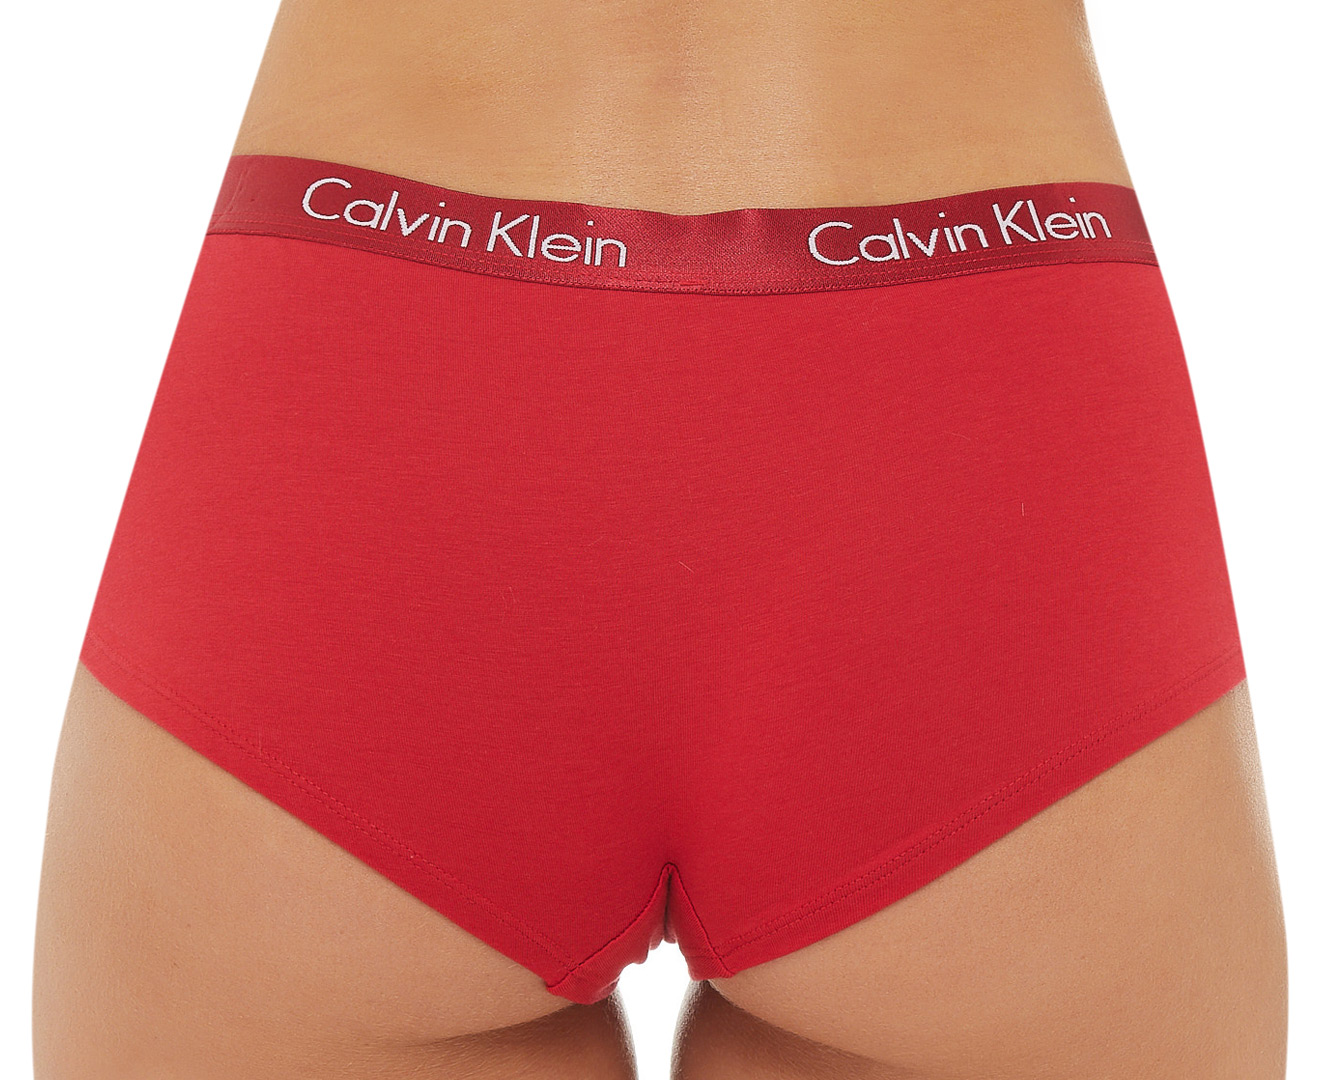 Calvin Klein Motive Cotton Boyshorts - Pack of 3 - ShopStyle Panties